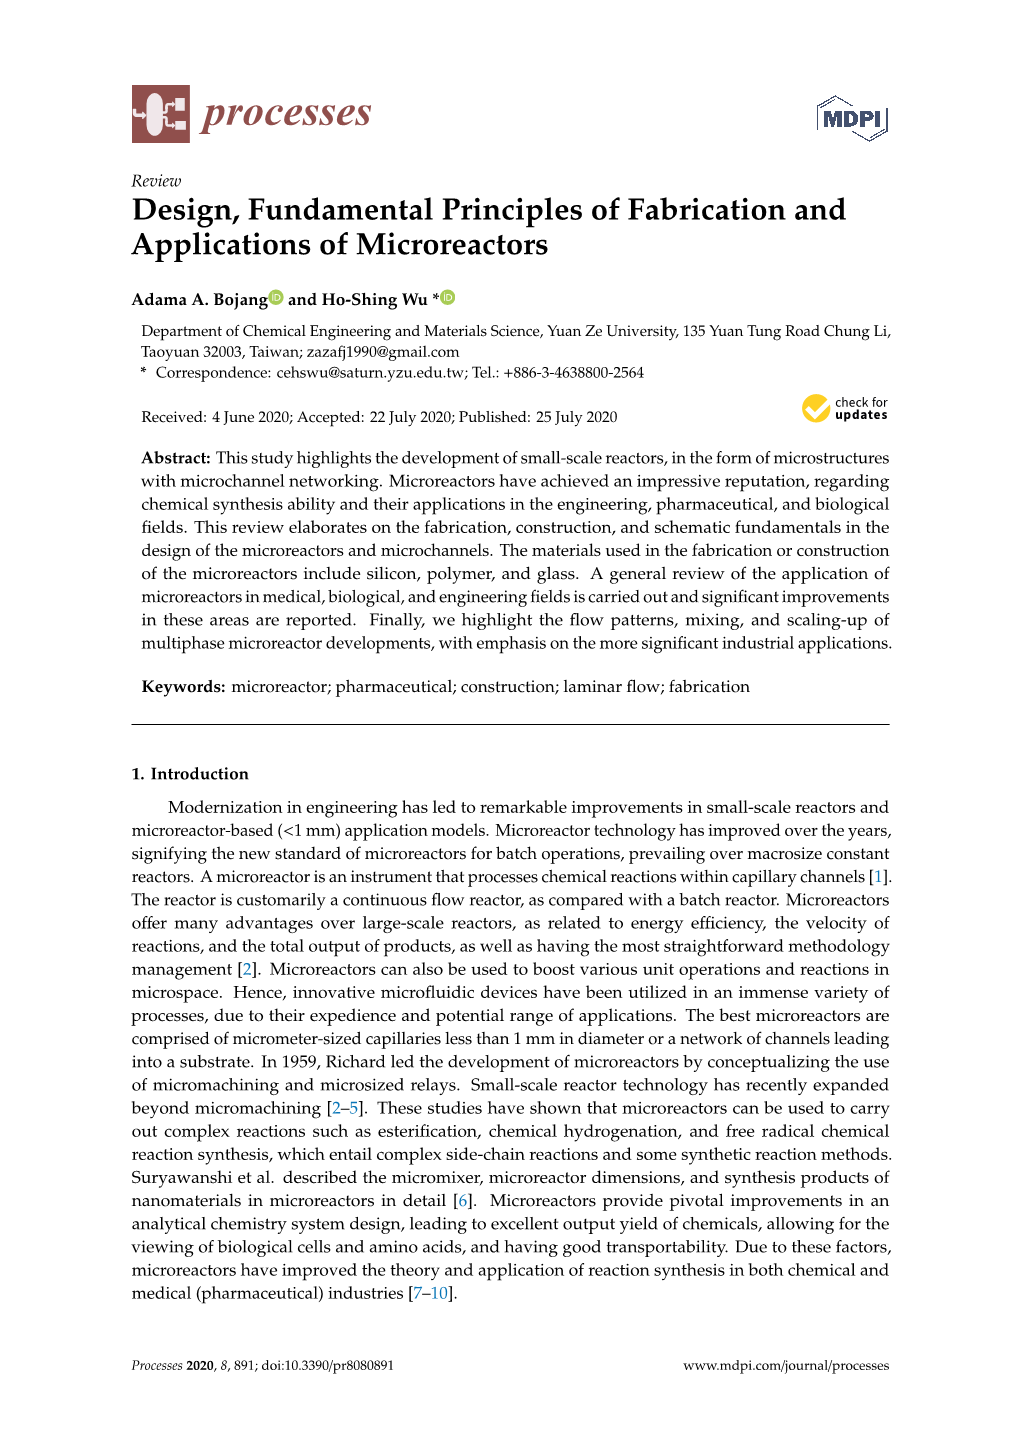 Design, Fundamental Principles of Fabrication and Applications of Microreactors